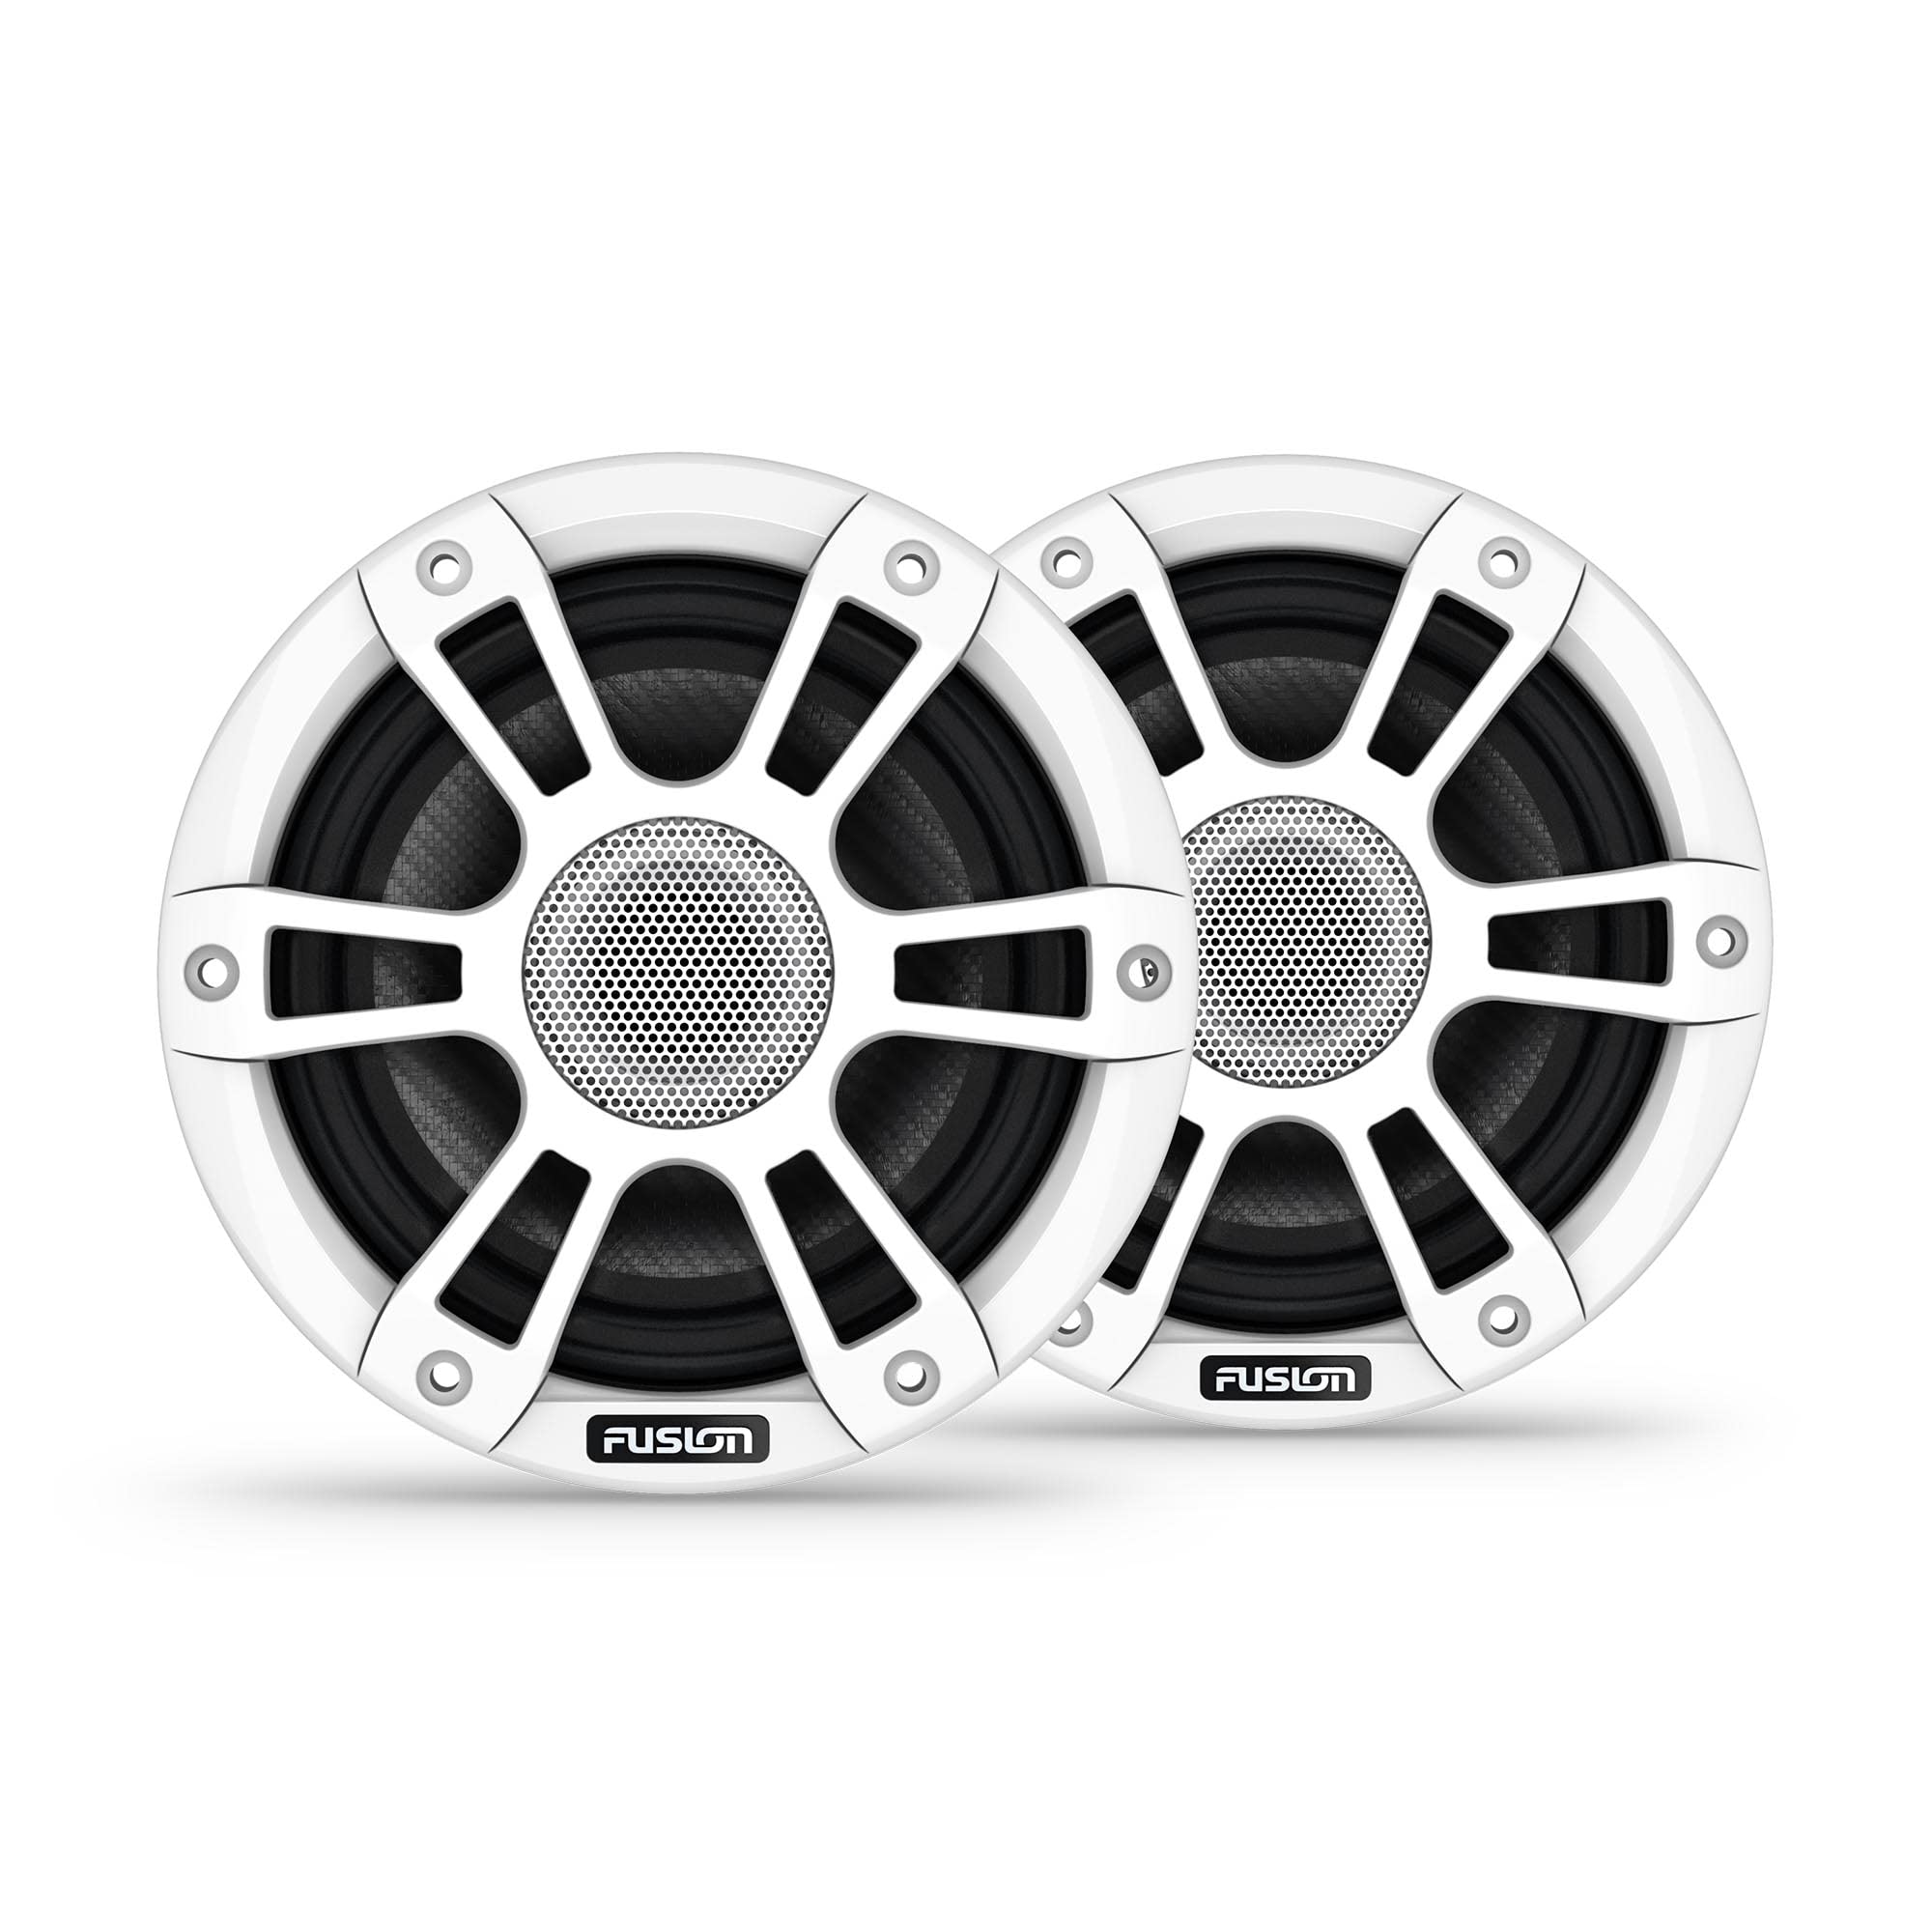 Garmin Fusion® Signature Series 3i Marine Coaxial Speakers, 6.5